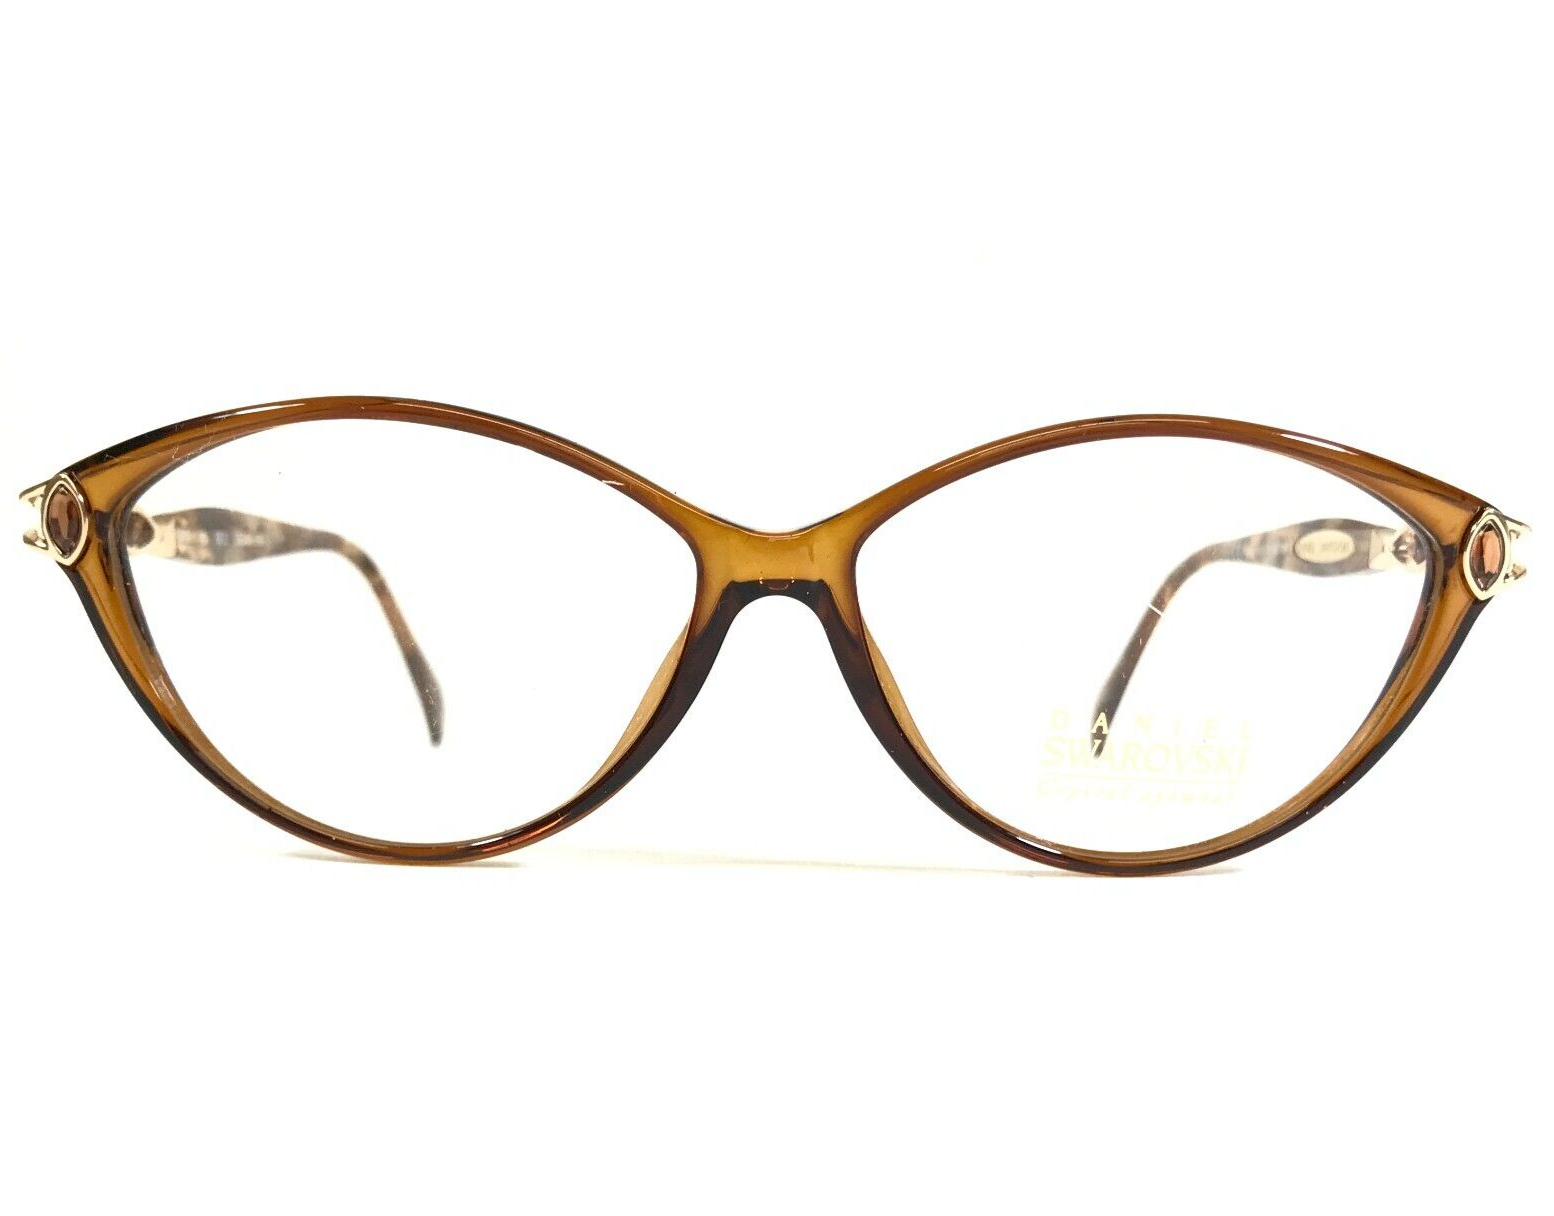 Primary image for Daniel Swarovski Eyeglasses Frames S013 /20 6052 Clear Brown Gold 53-12-130